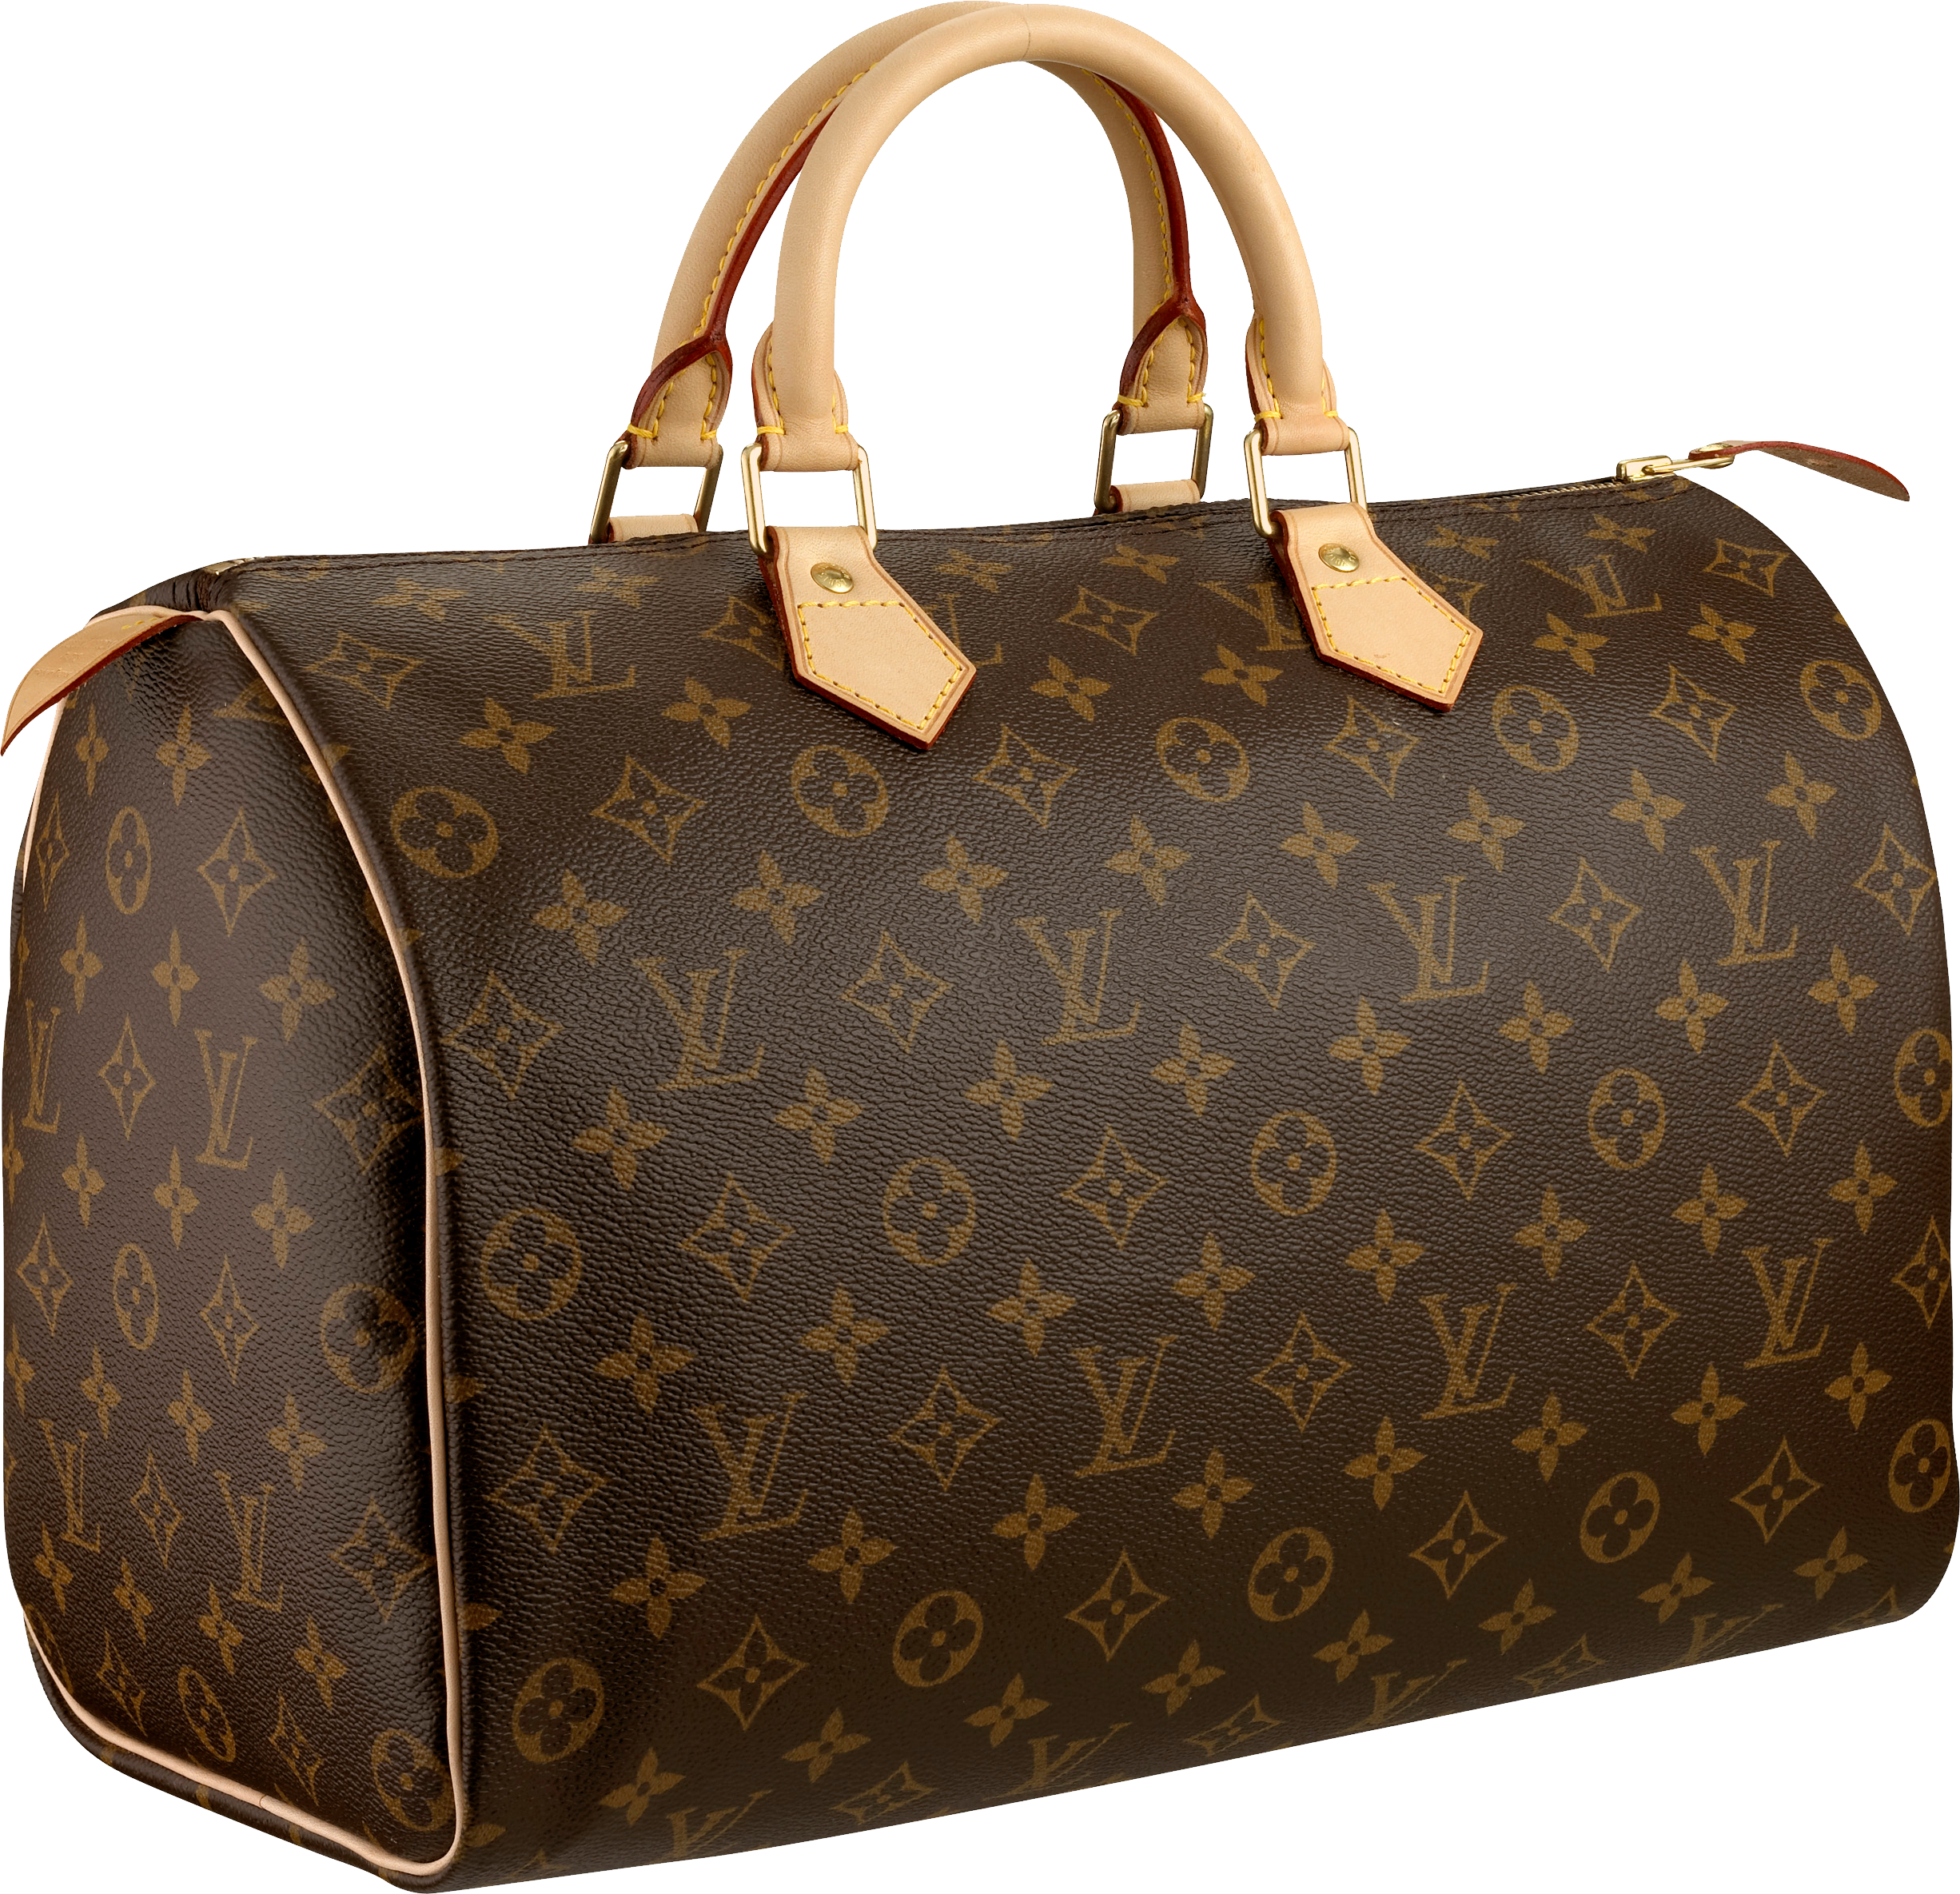 Louis Vuitton Women bag PNG Image - PurePNG | Free transparent CC0 PNG Image Library